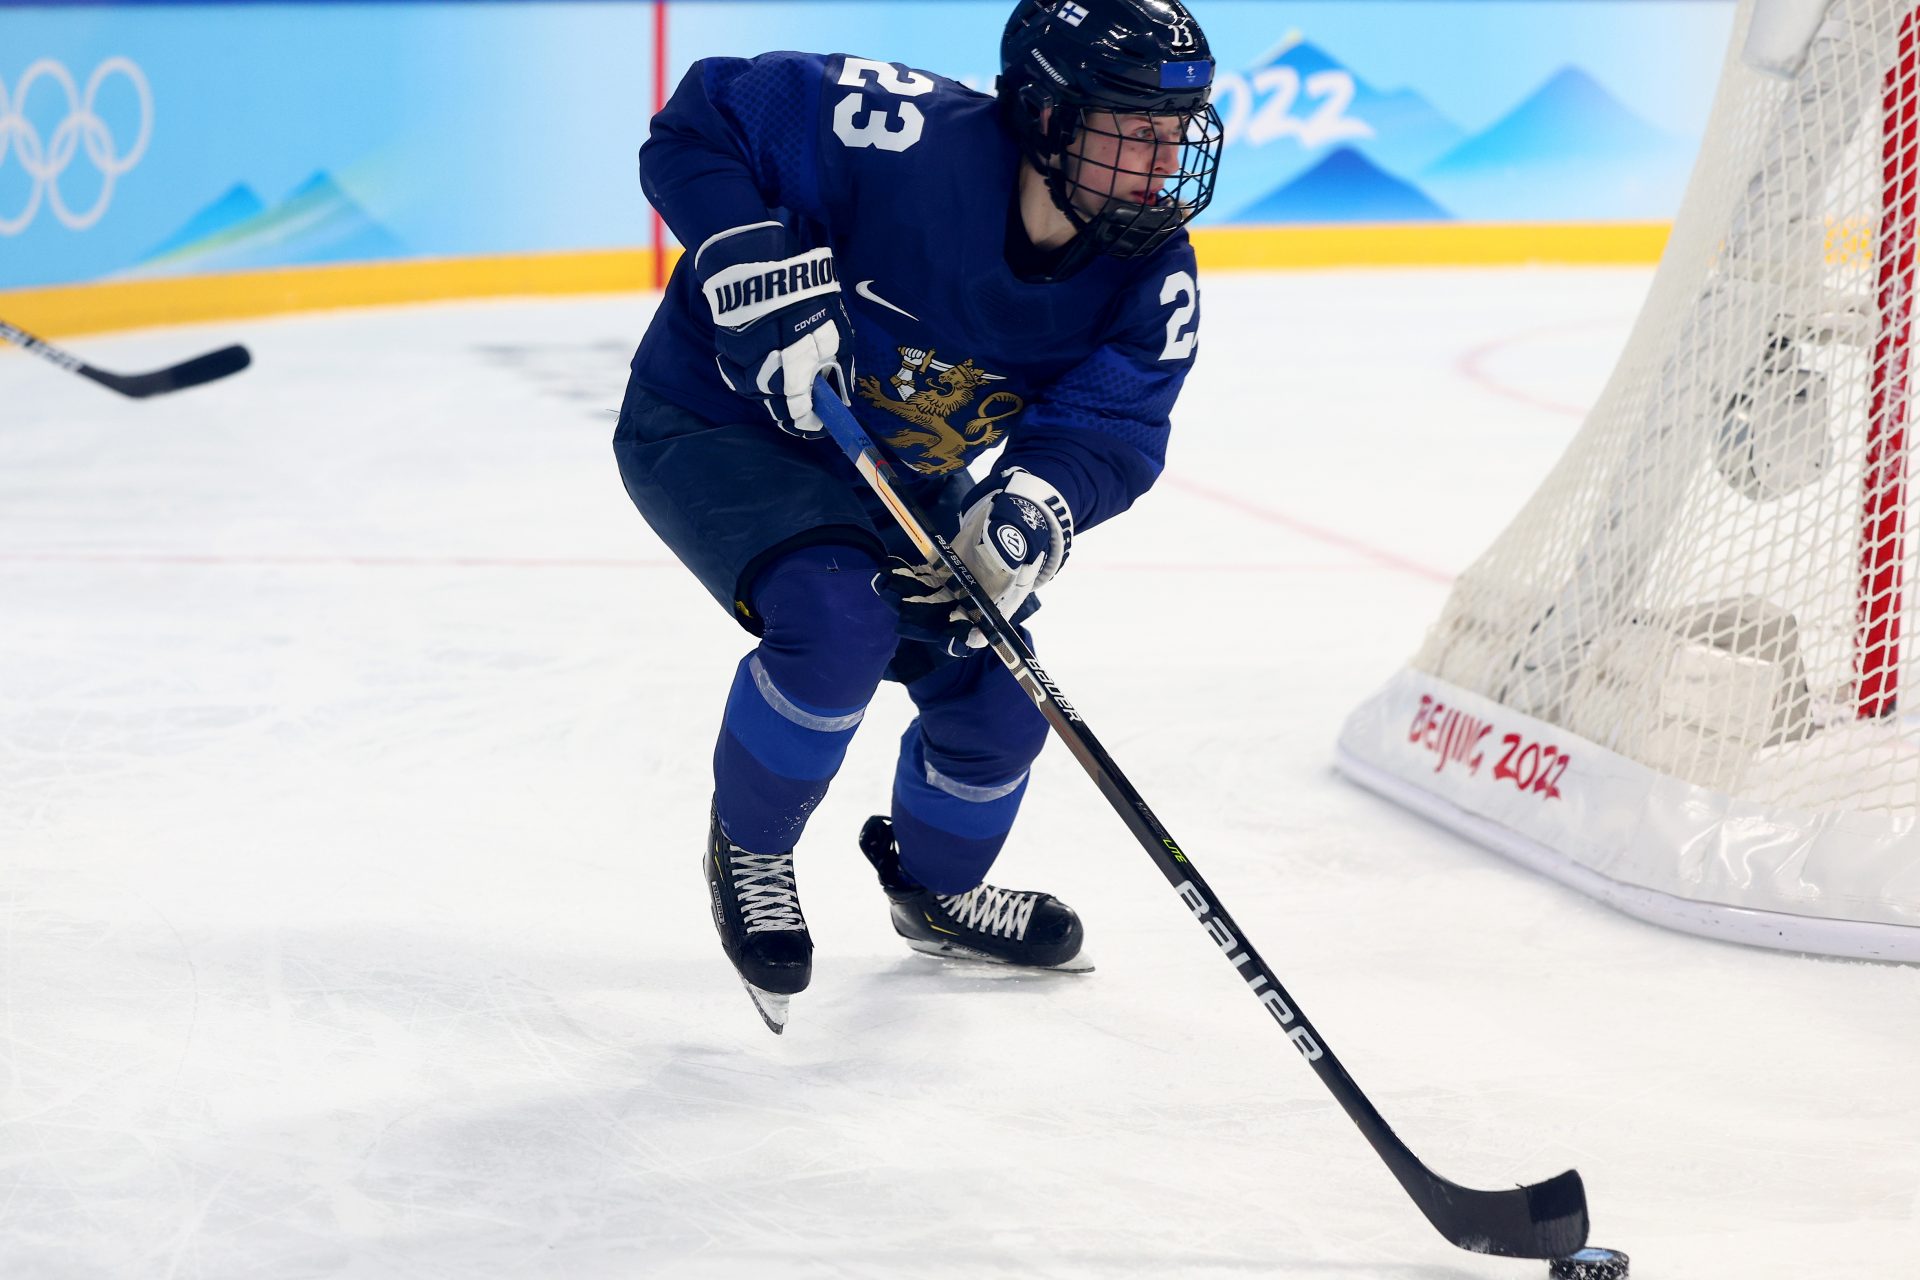 Sanni Hakala paralyzed after head-first collision in latest ice hockey injury